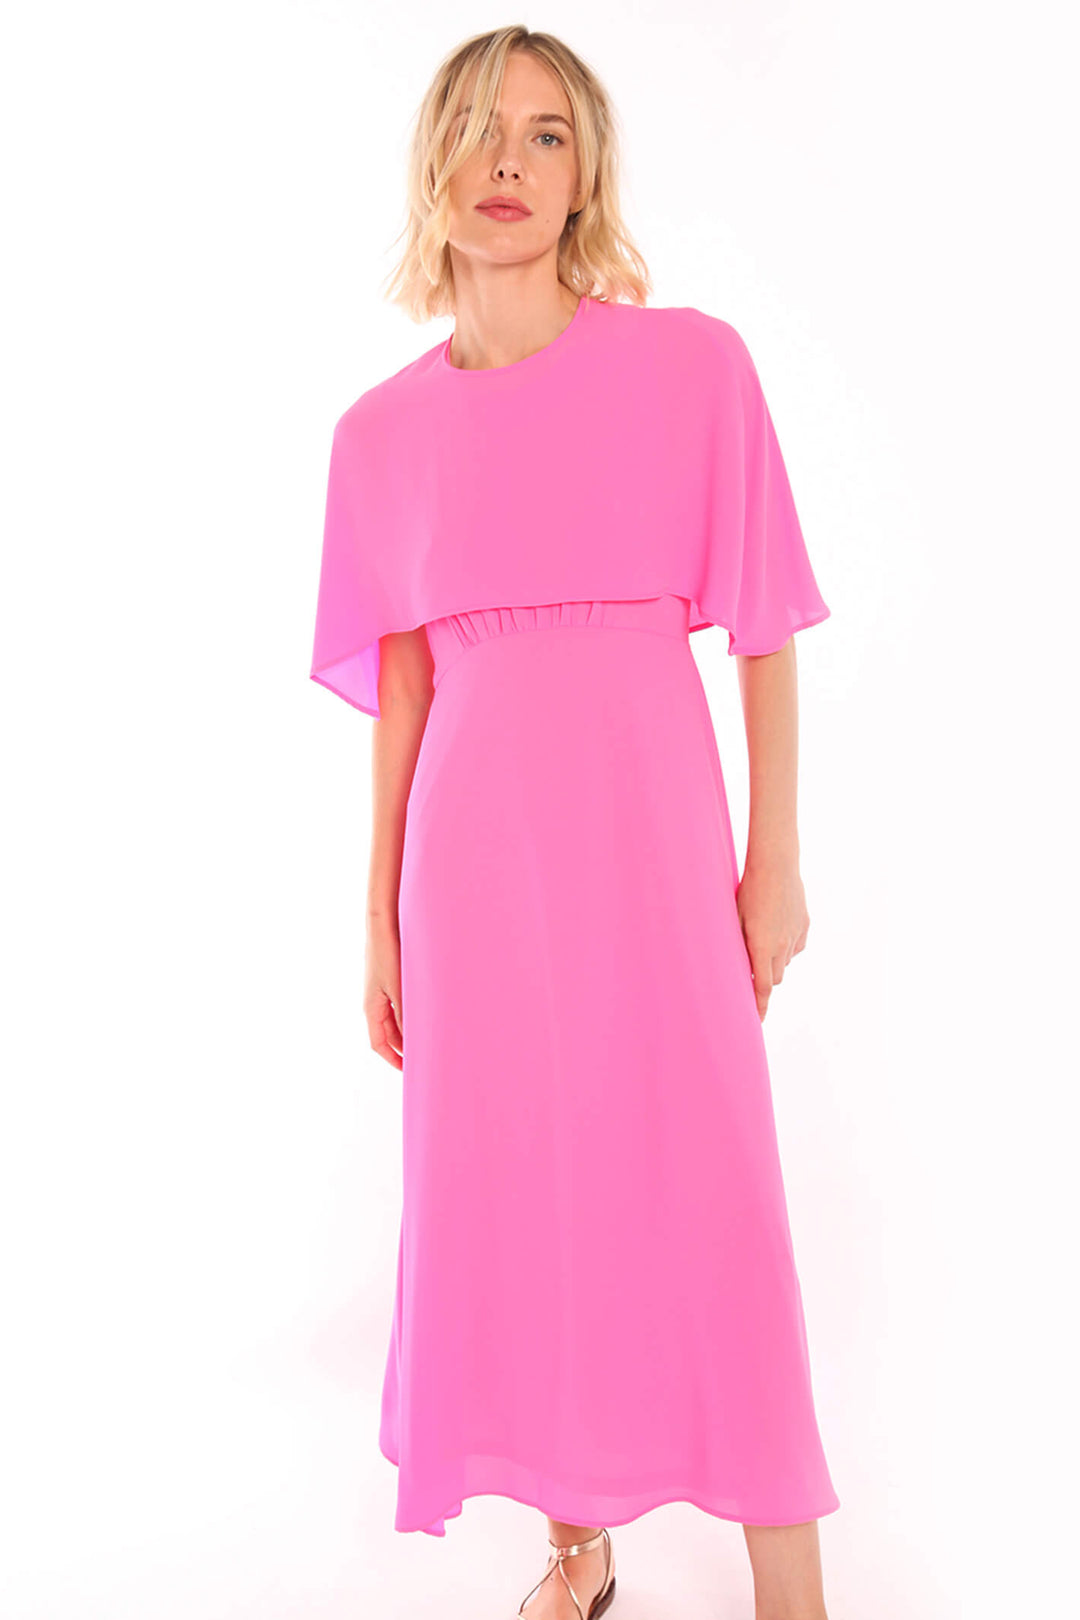 Vilagallo 30006 Pink Georgette Dress - Olivia Grace Fashion